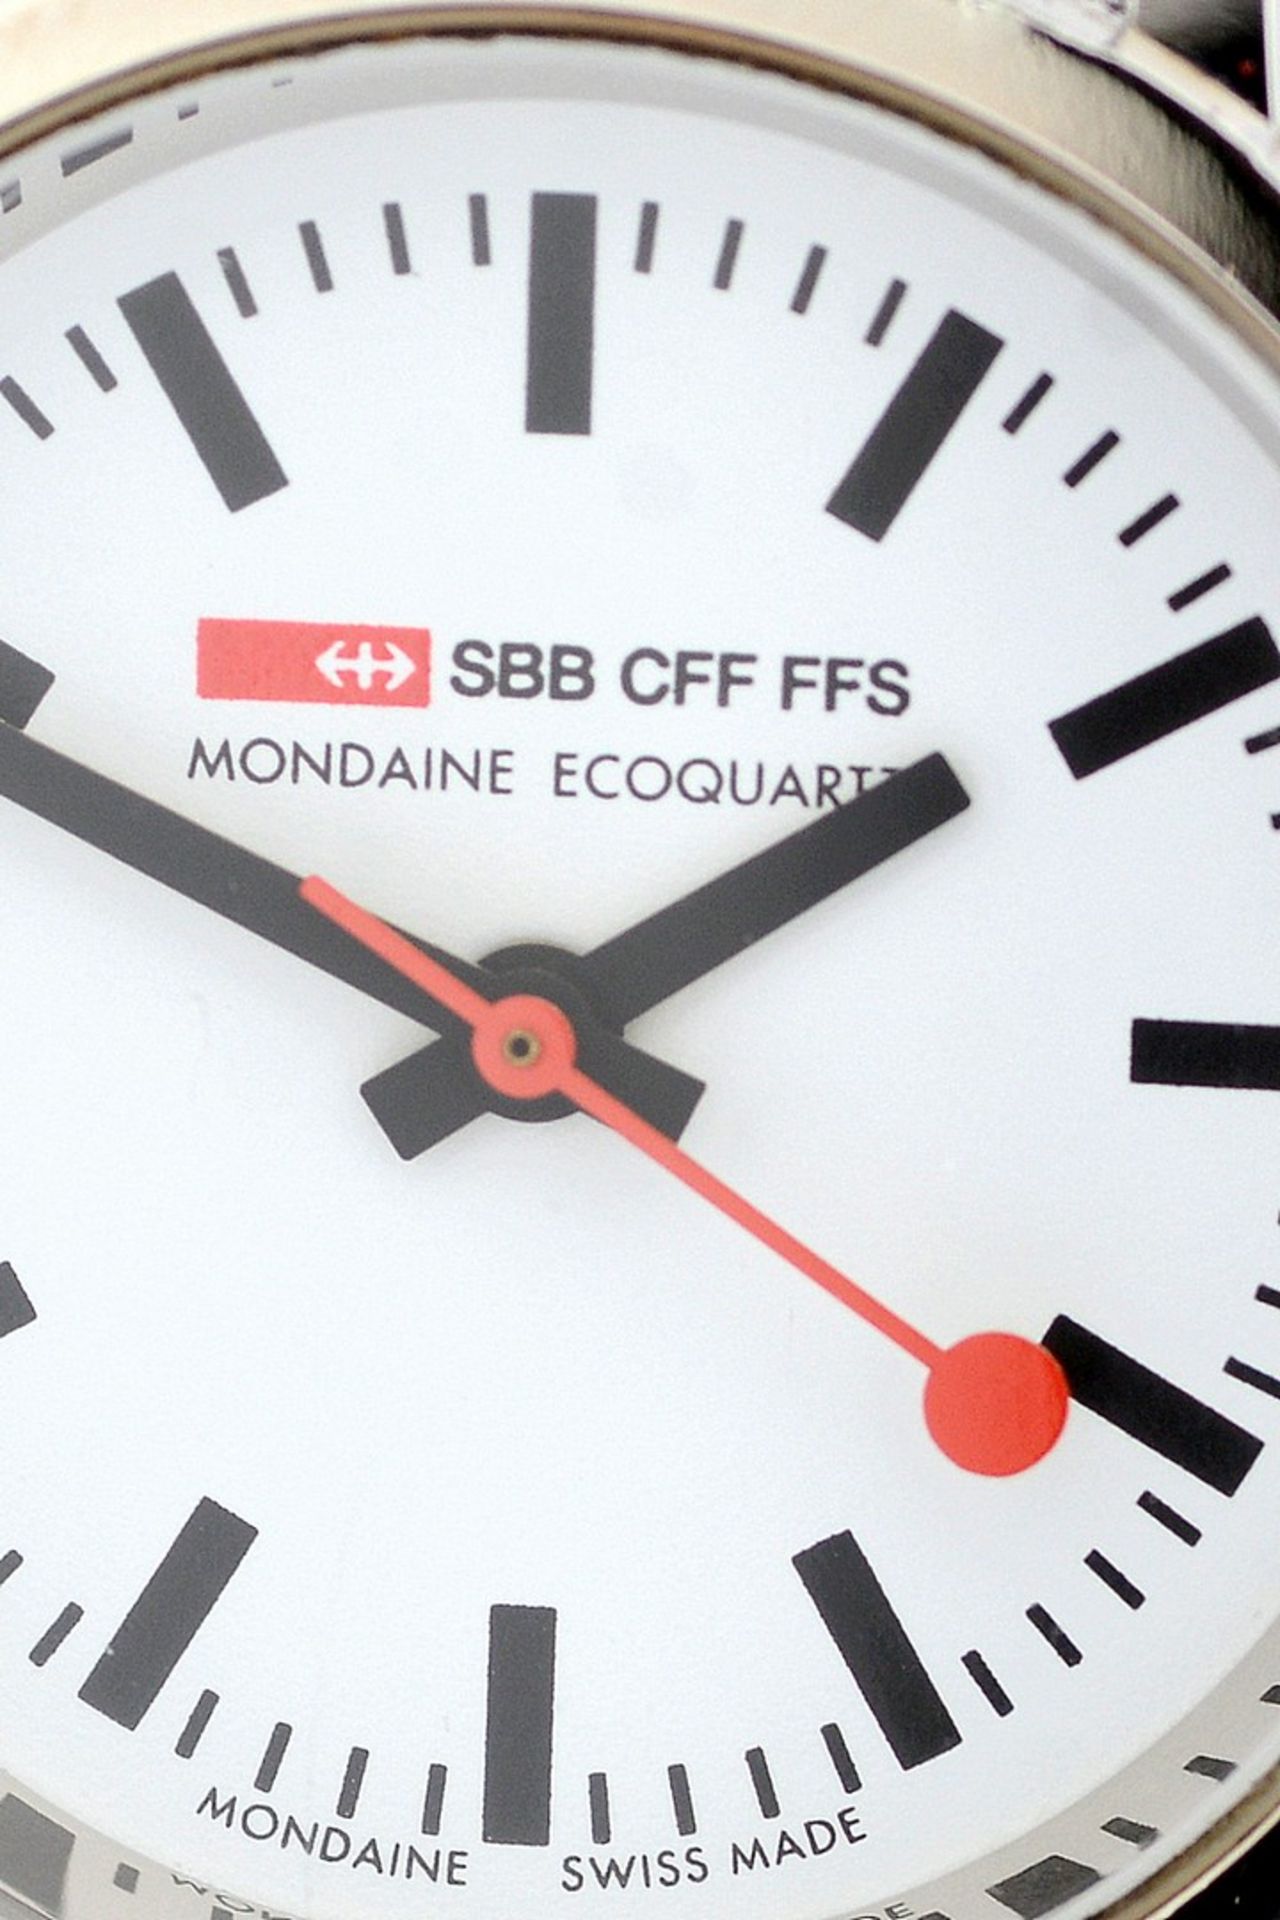 Mondaine / SBB CFF FFS Ecoquartz Official Swiss Railway Watch - (Unworn) Leather / Lady's - Image 2 of 7